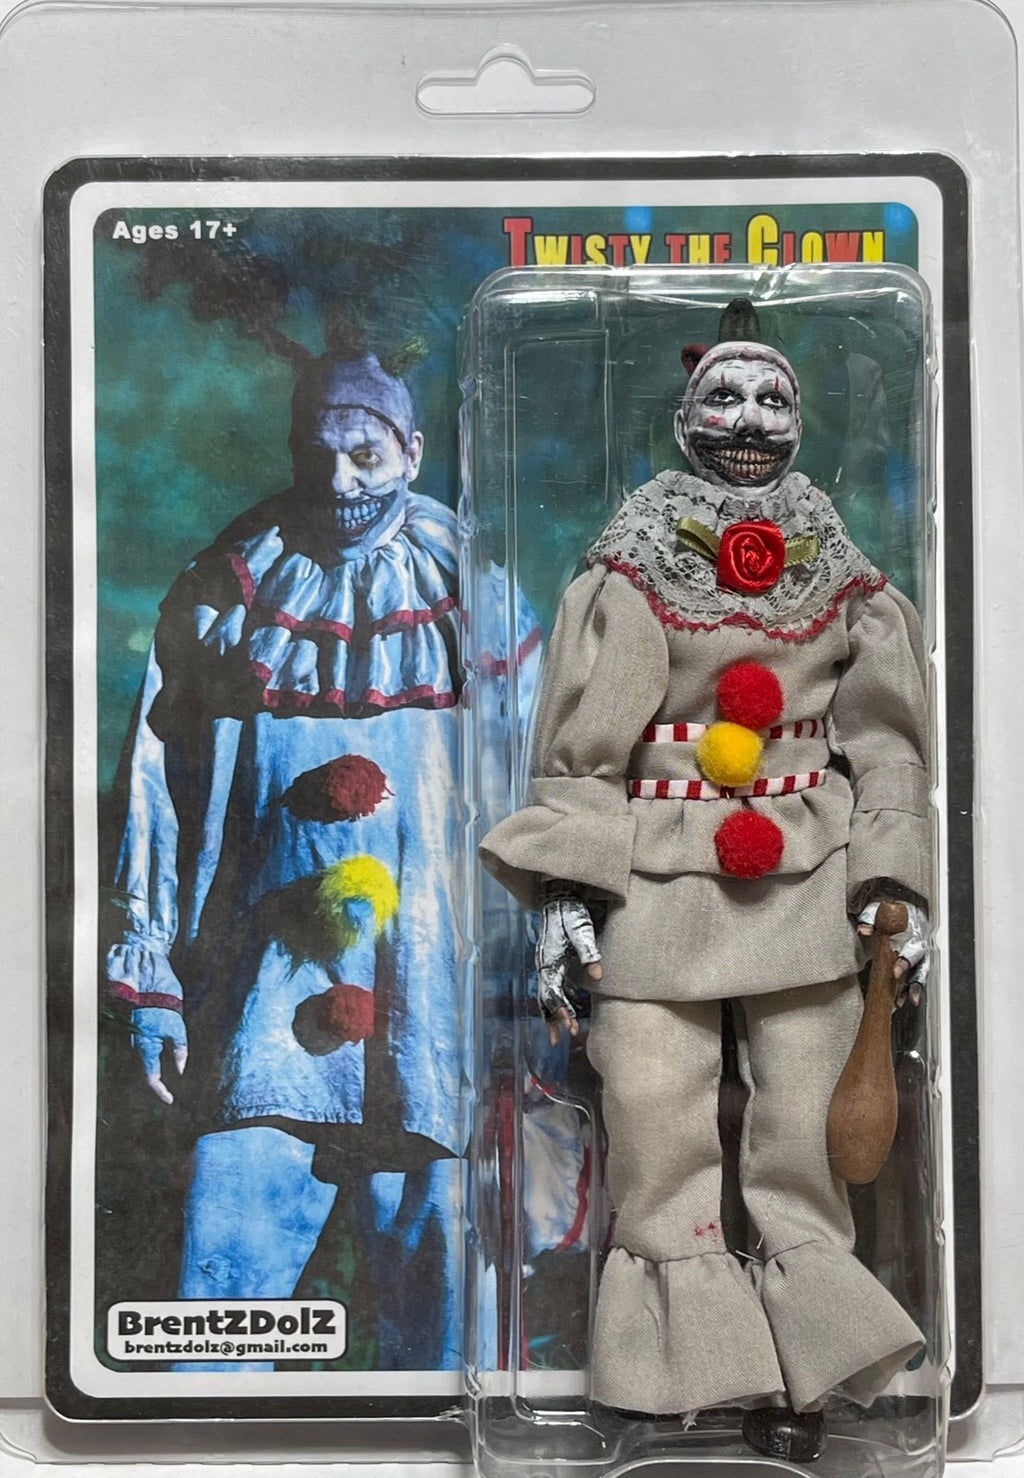 Scary Harry Killer Clown Figurine